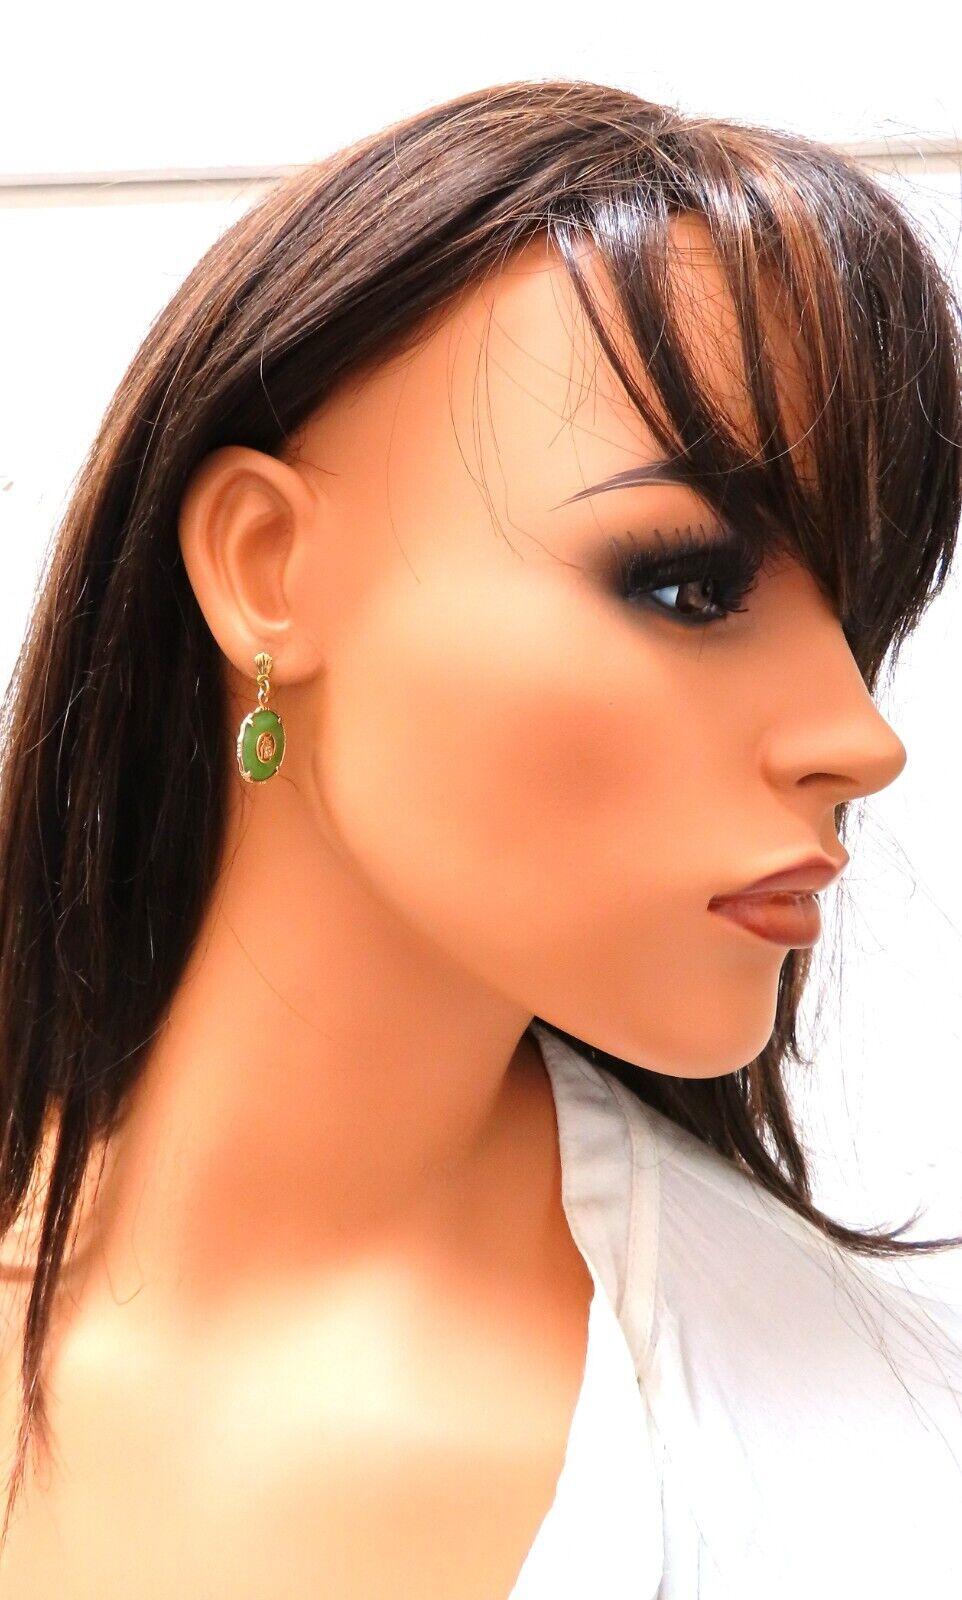  Chinese Jade drop dangle earrings

14mm diameter

14 karat yellow gold 3.8 gram

Earrings measure 1 inch long

Comfortable Butterfly Dangle